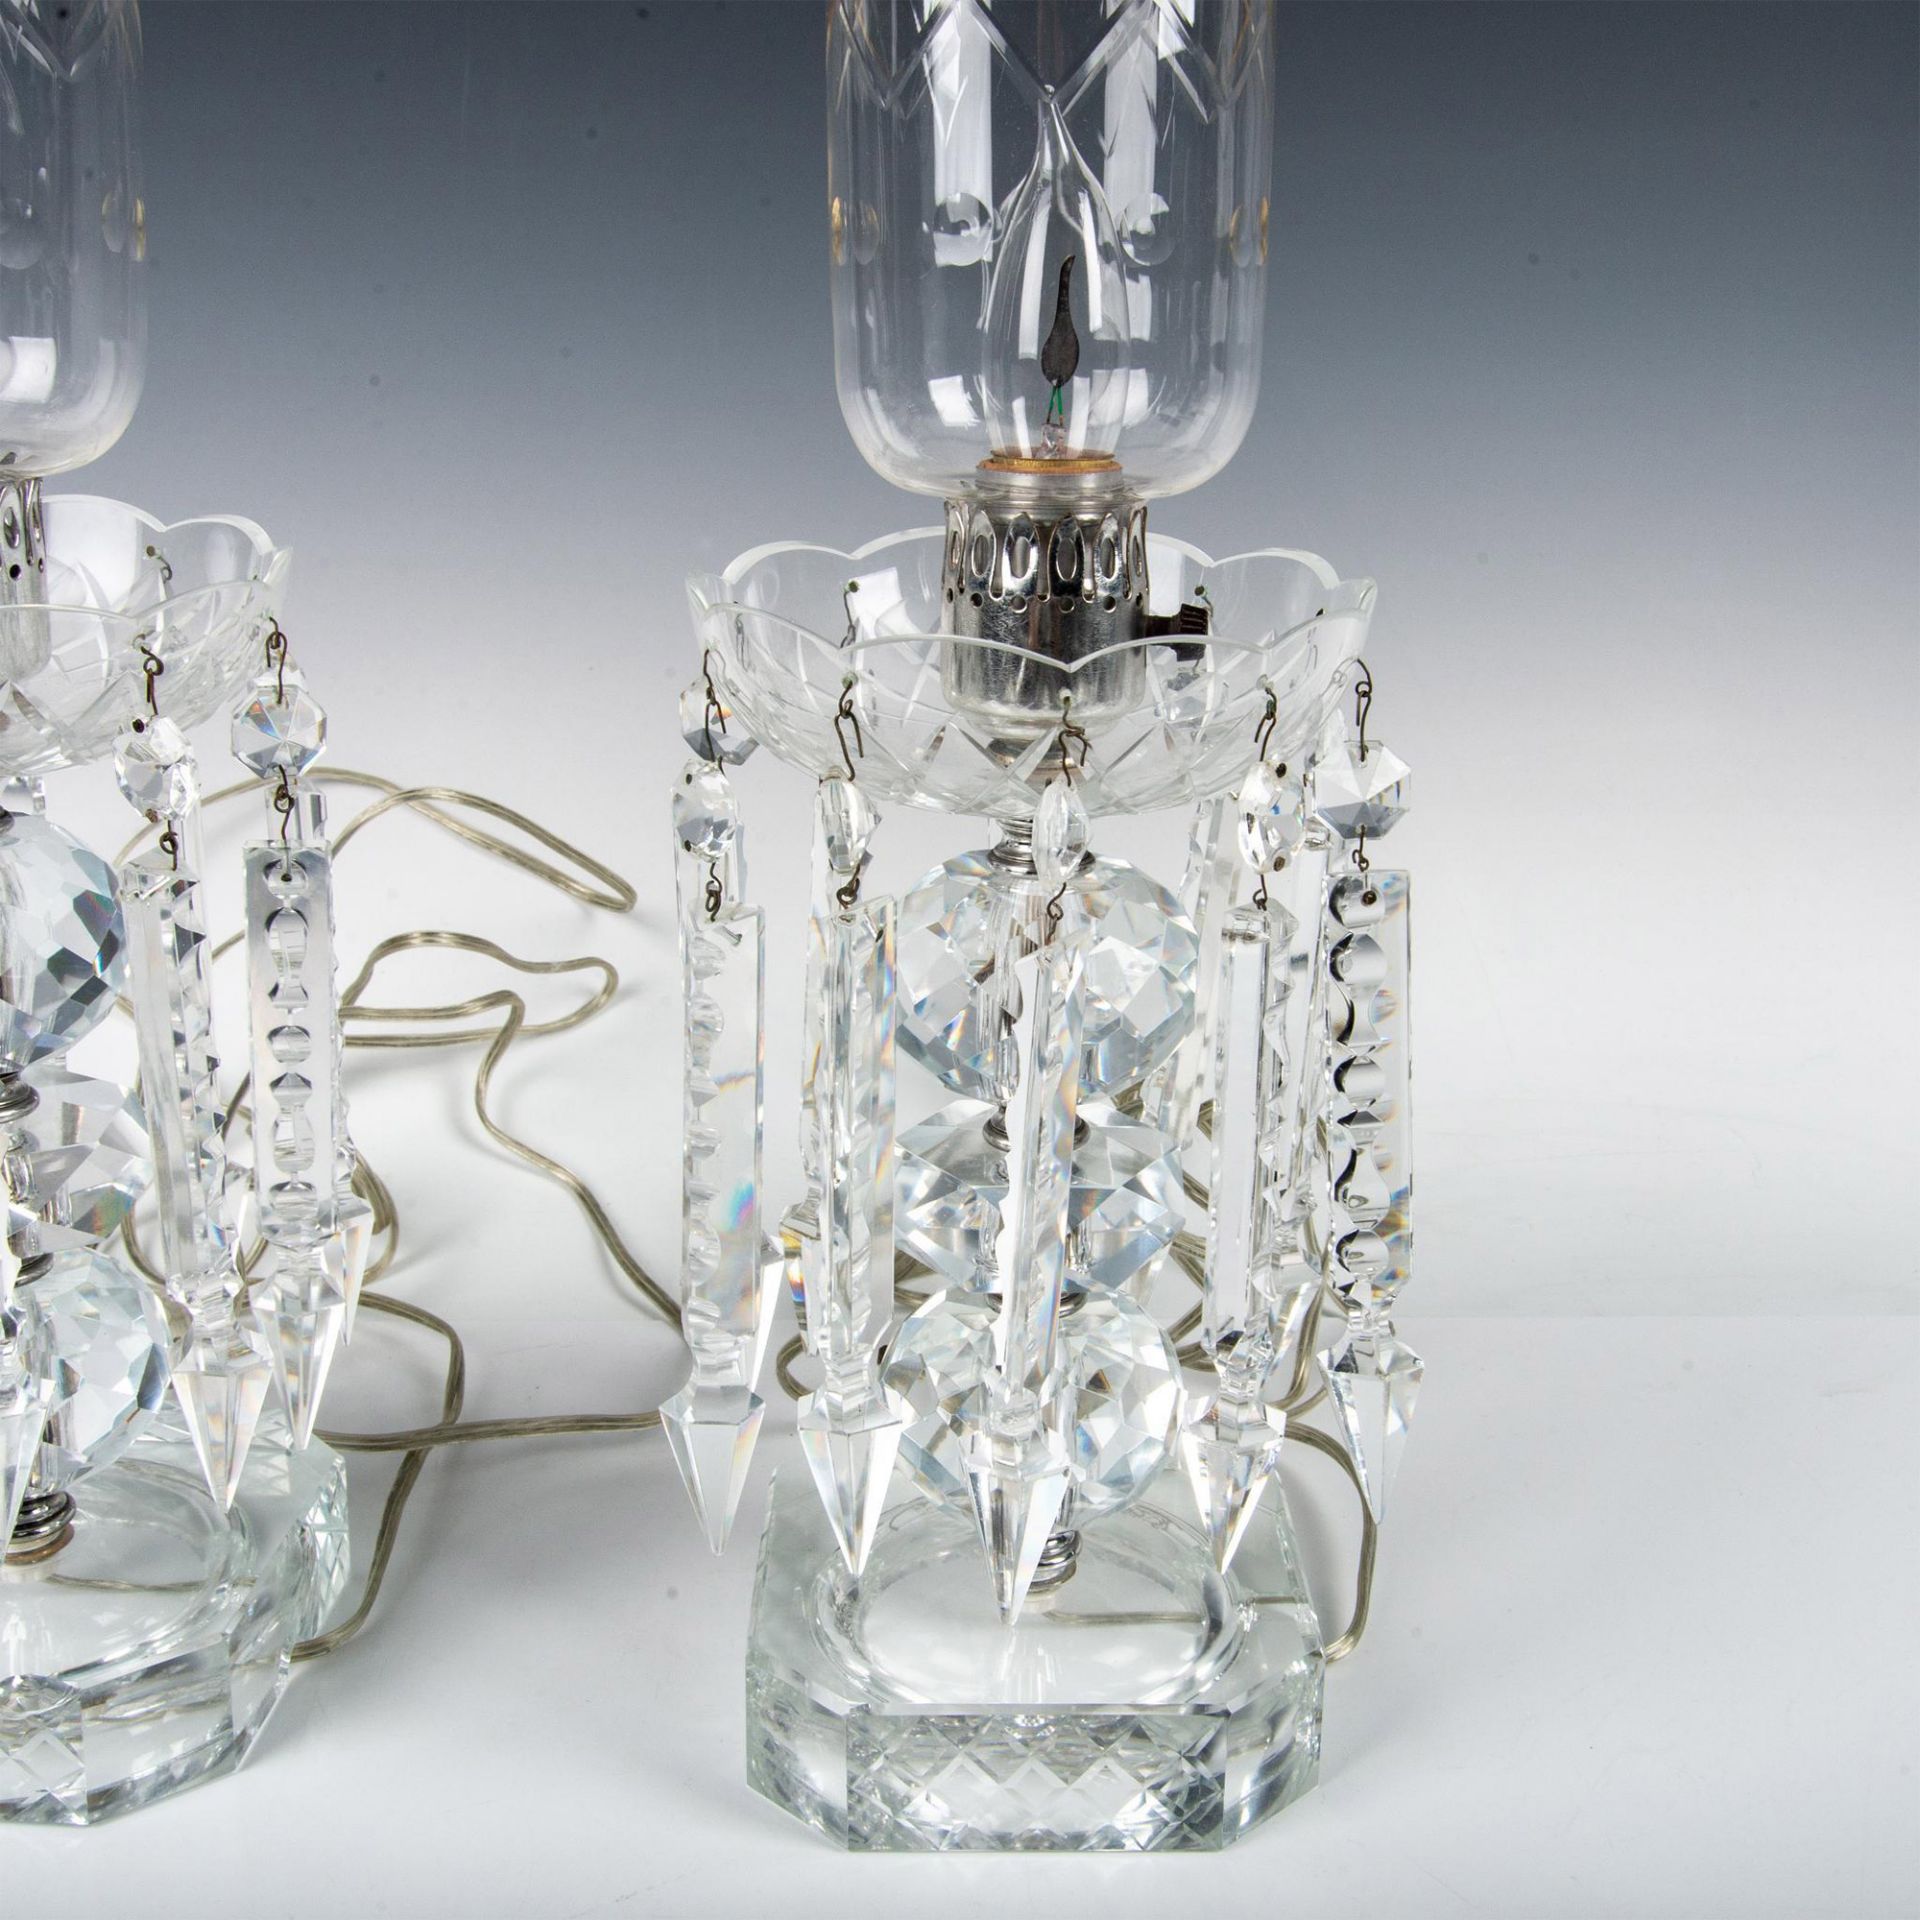 Pair of MCM Crystal Boudoir Lamps - Image 6 of 7